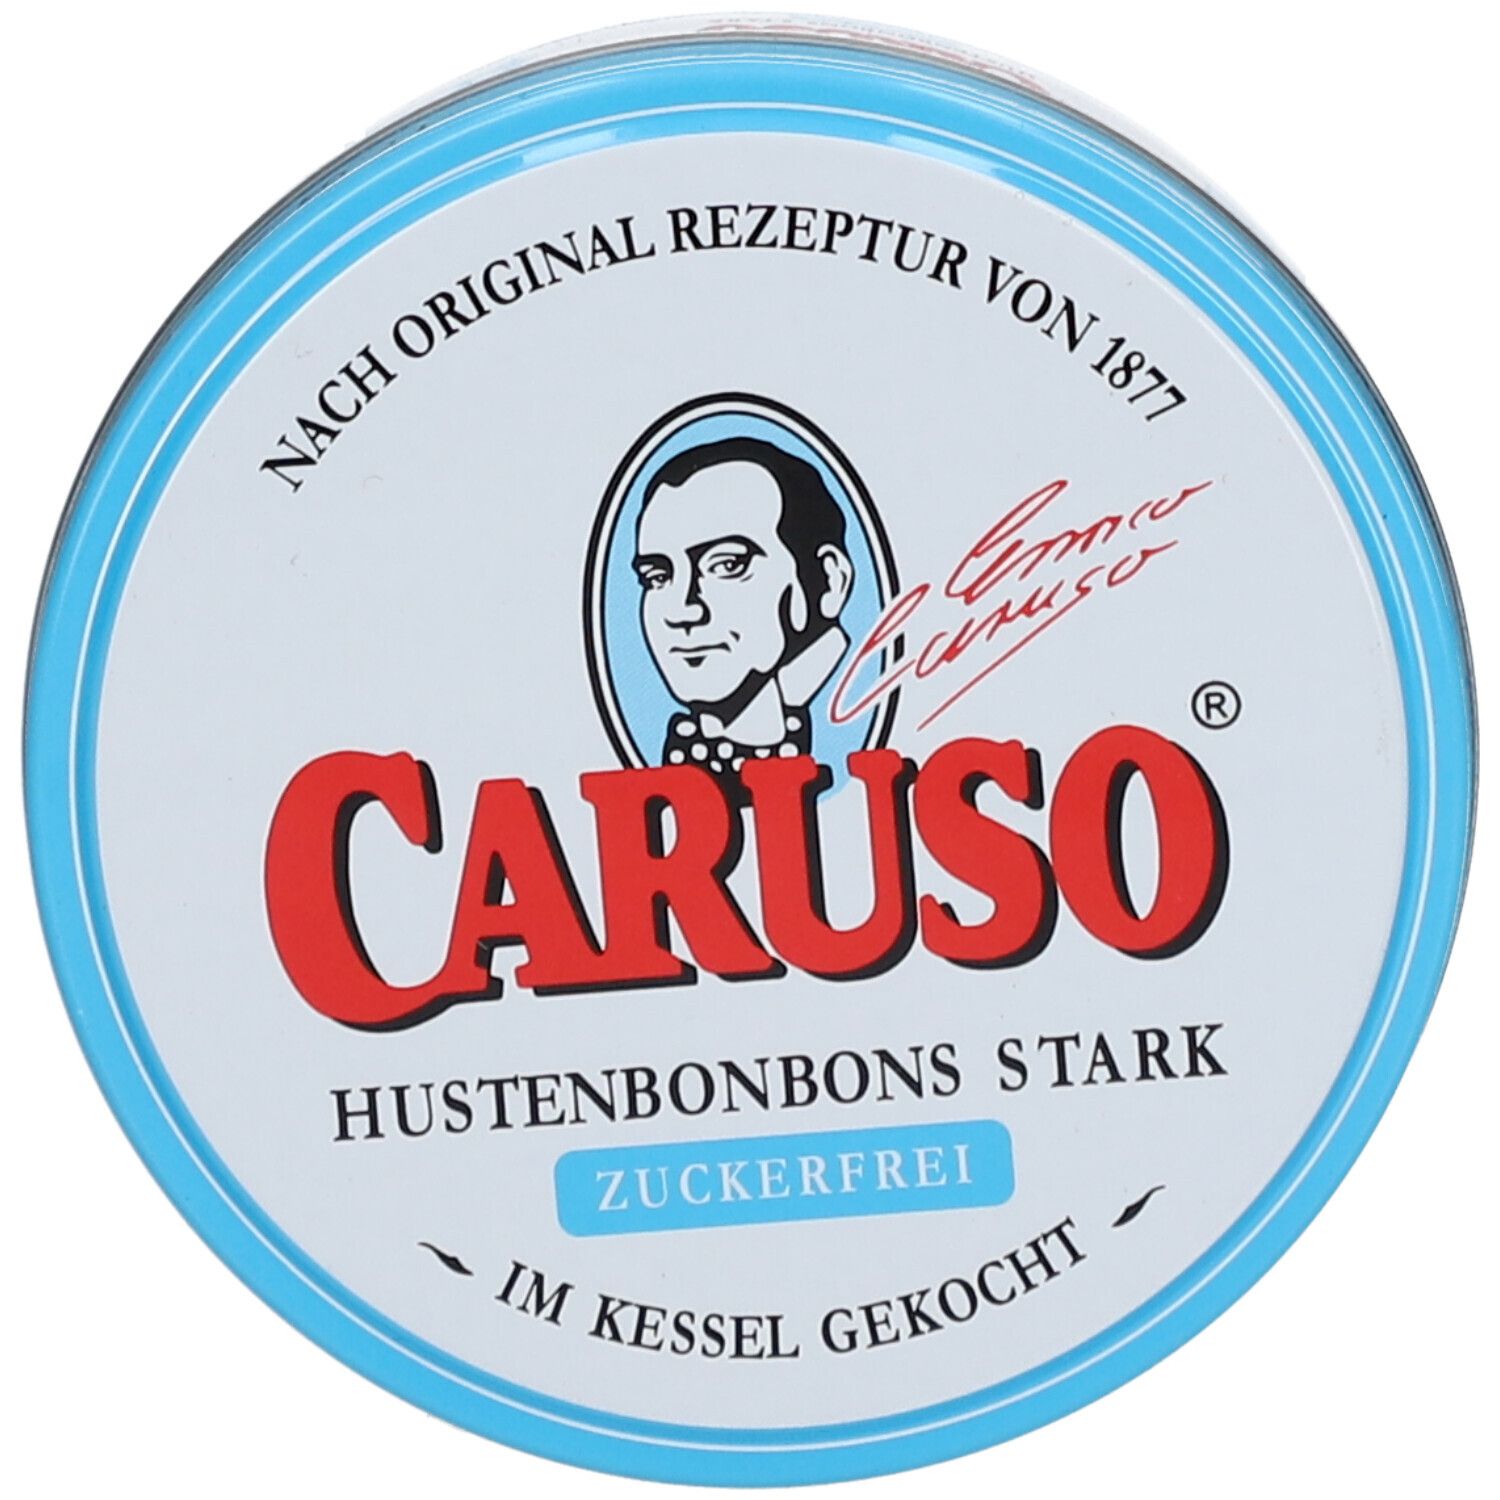 Caruso® Hustenbonbons Stark Zuckerrei